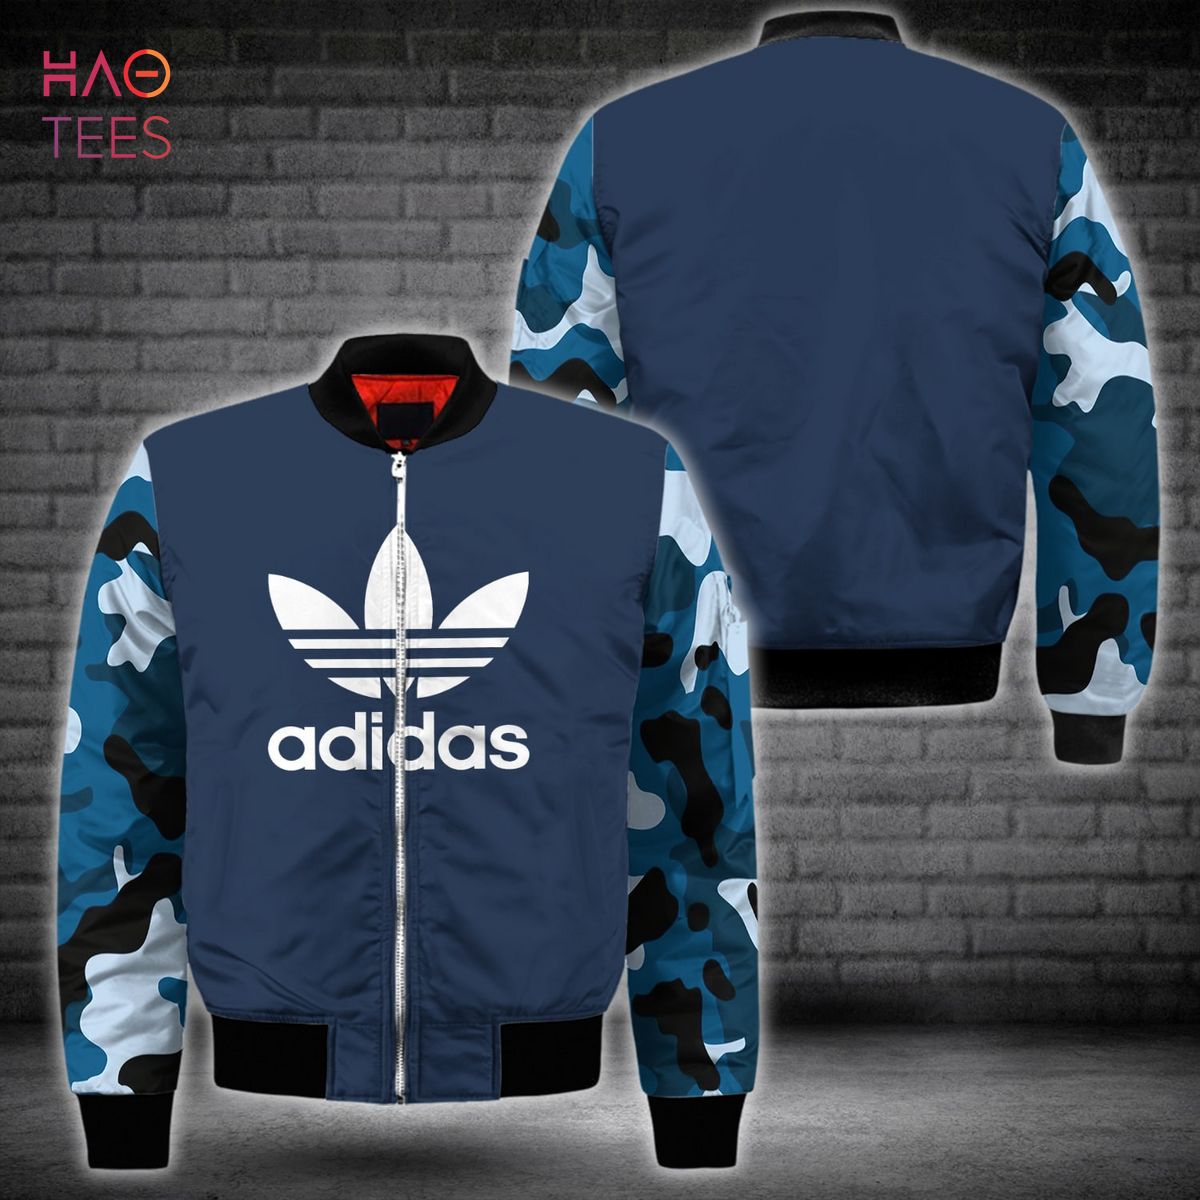 HOT Adidas Blue Army Camouflage Luxury Brand Bomber Jacket Limited Edition